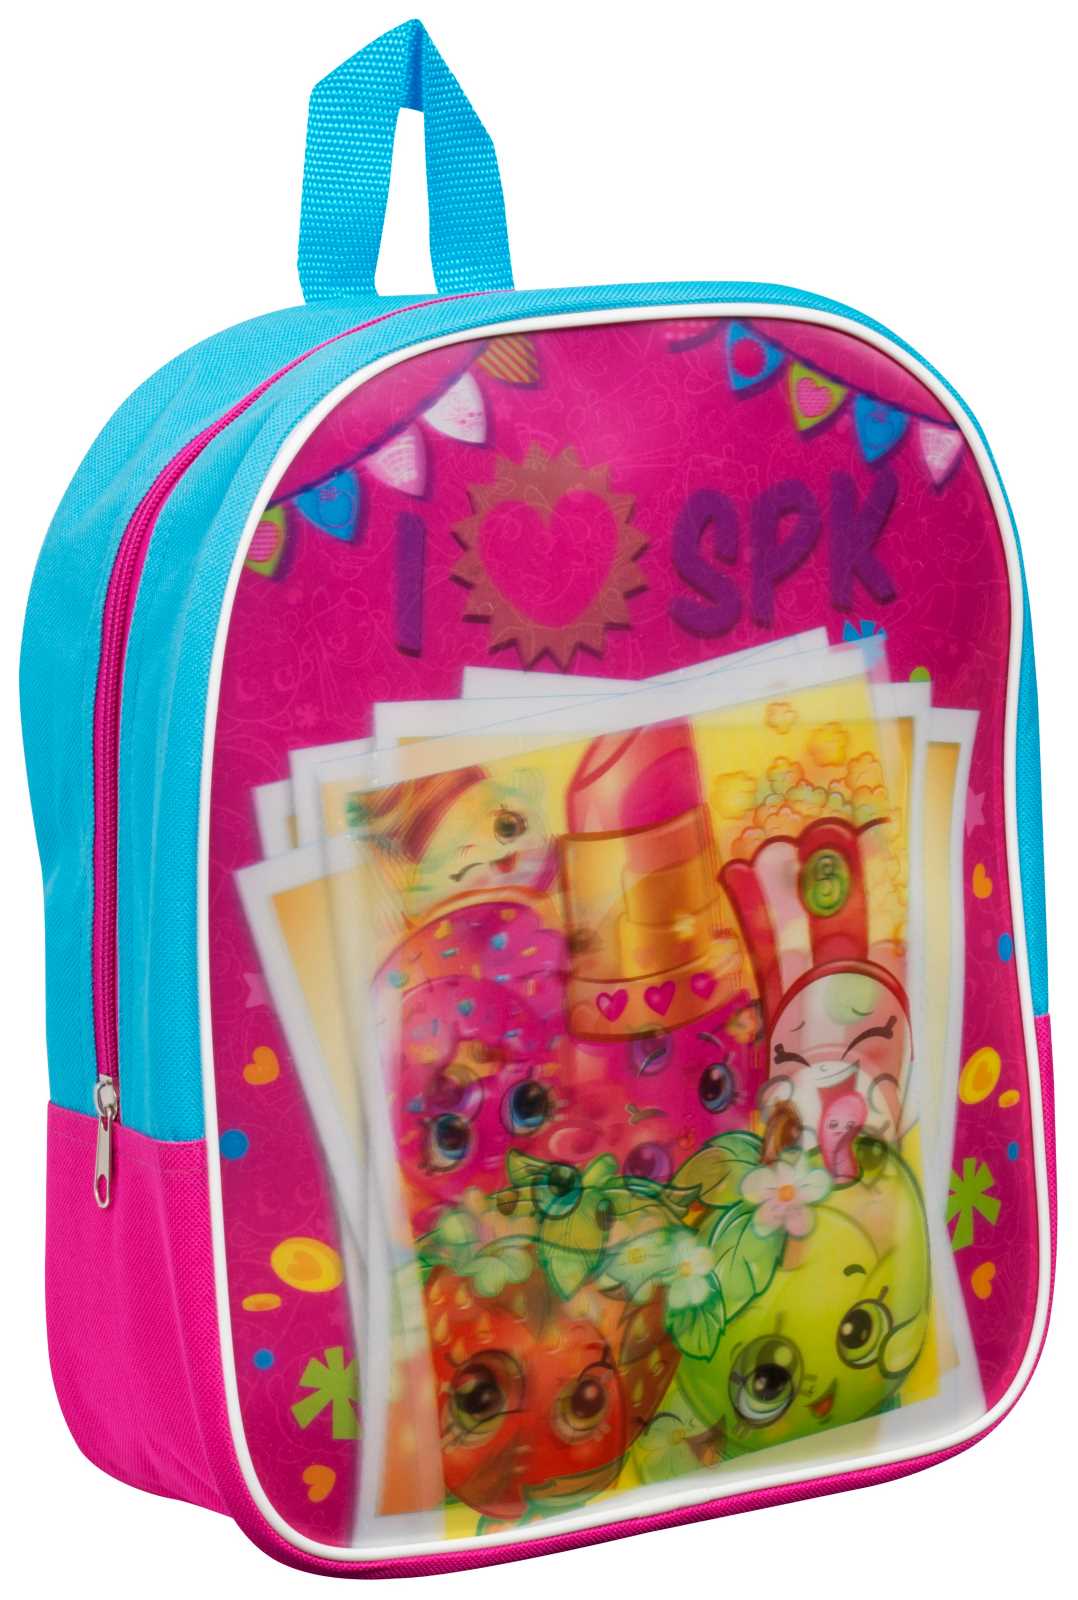 Shopkins Girl's Lenticular Small Backpack